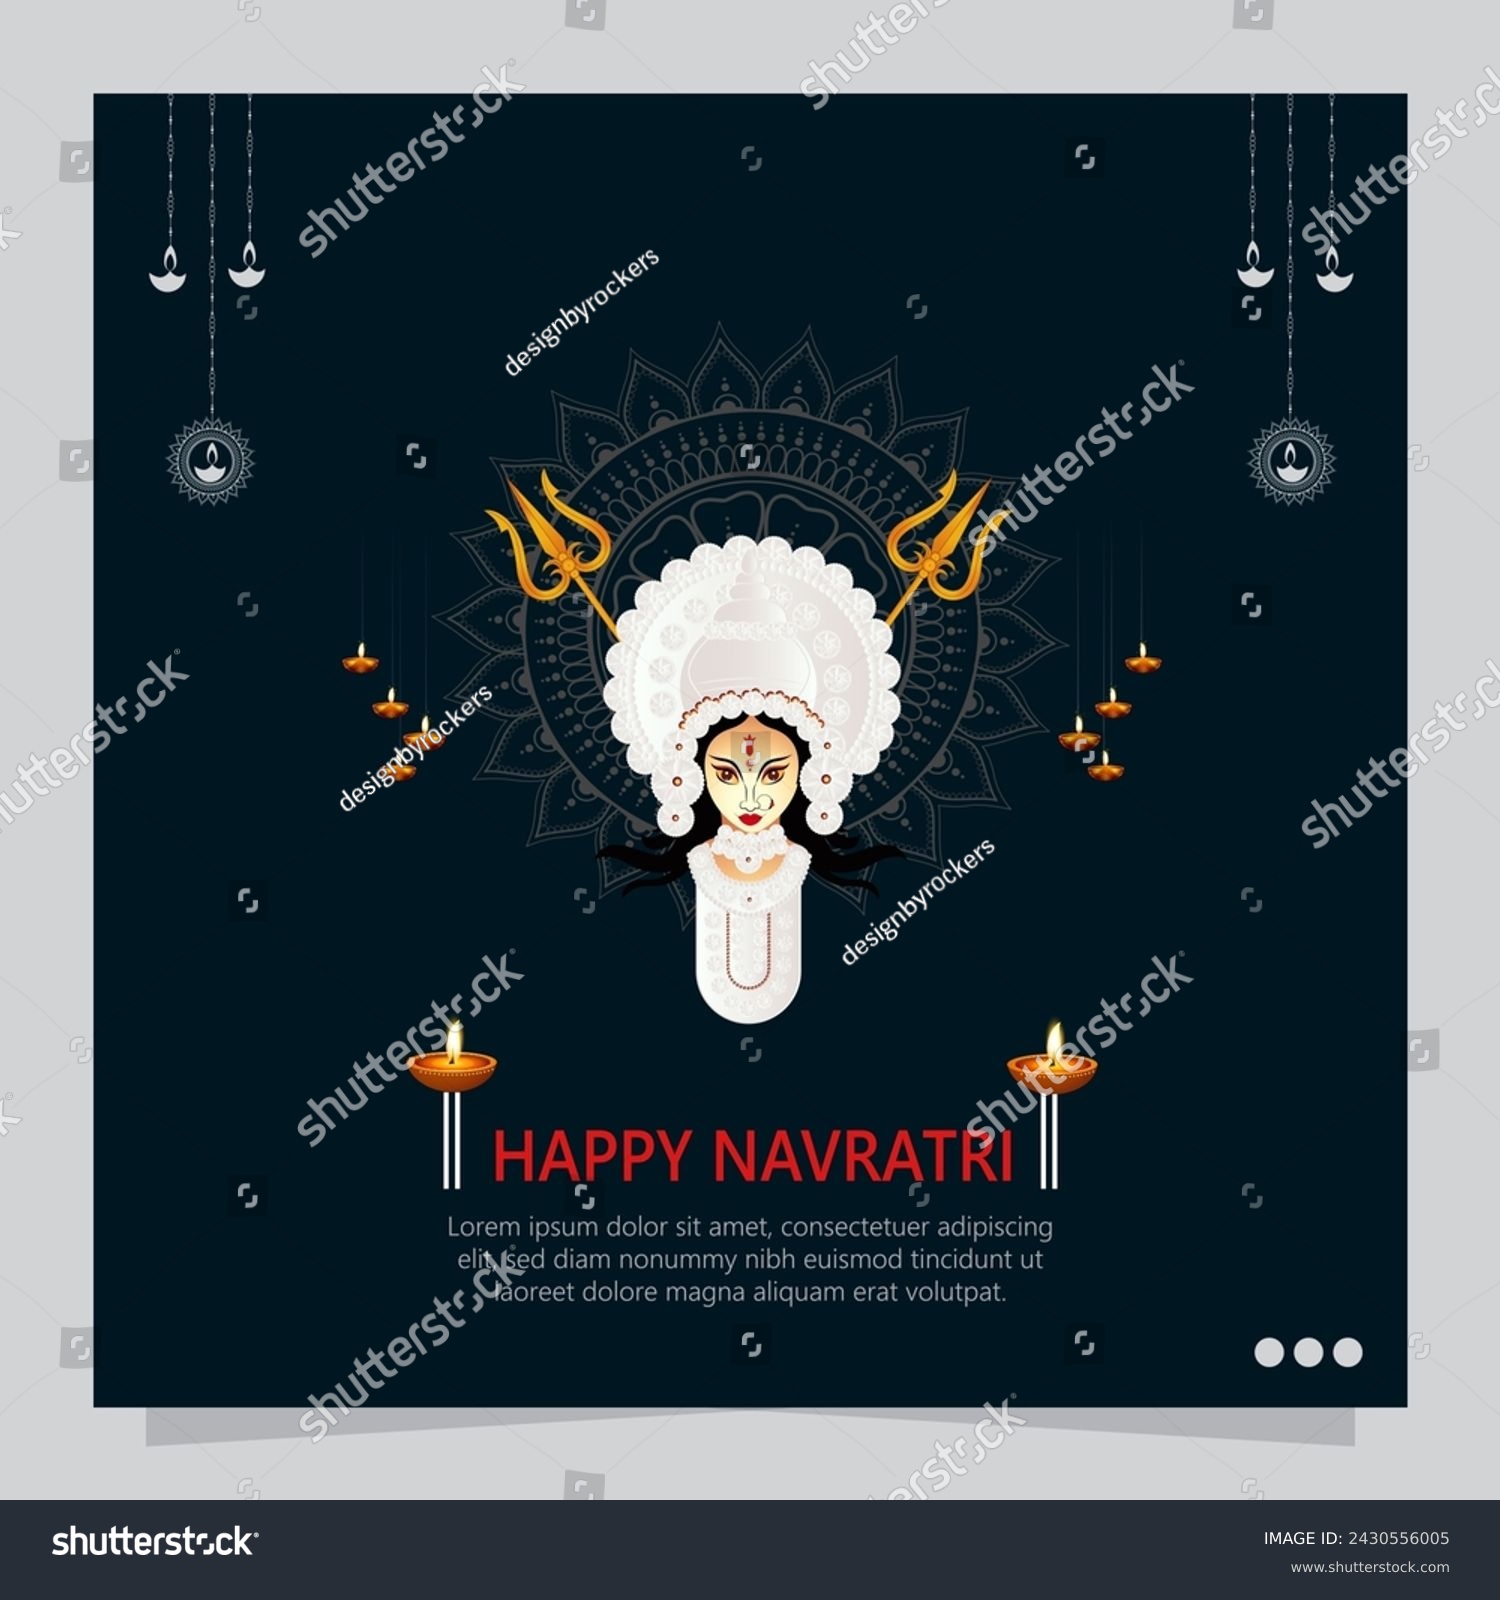 SVG of Navratri is a Hindu festival celebrated over nine nights, dedicated to the goddess Durga. svg